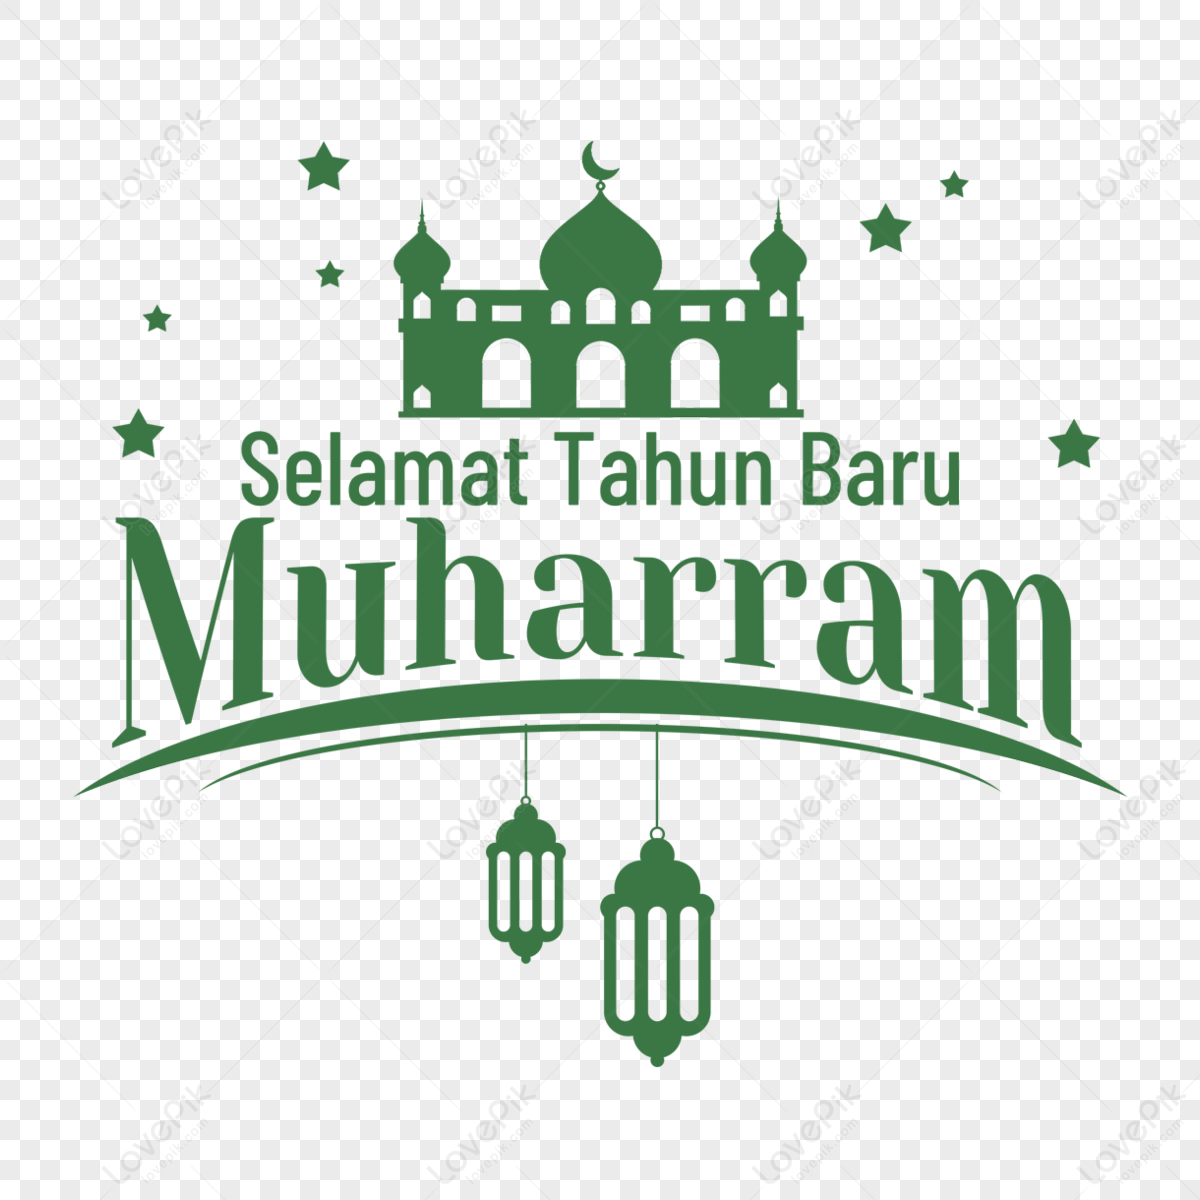 Muharram 2022: Months In Islamic Calendar And Their Significance